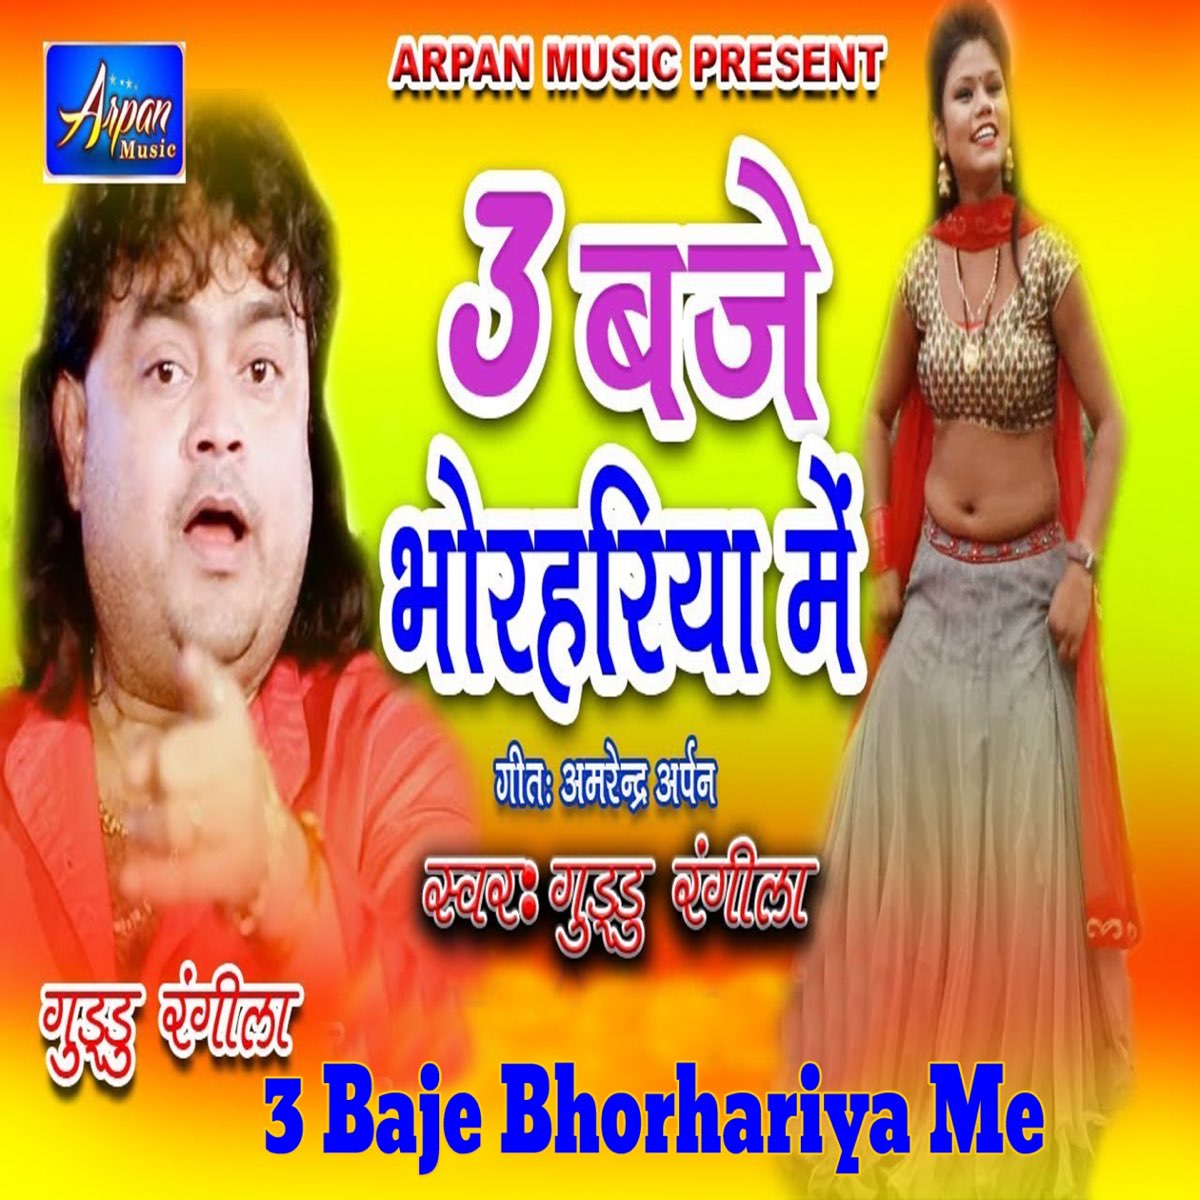 3 Baje Bhorhariya Me - Single by Guddu Rangeela on Apple Music